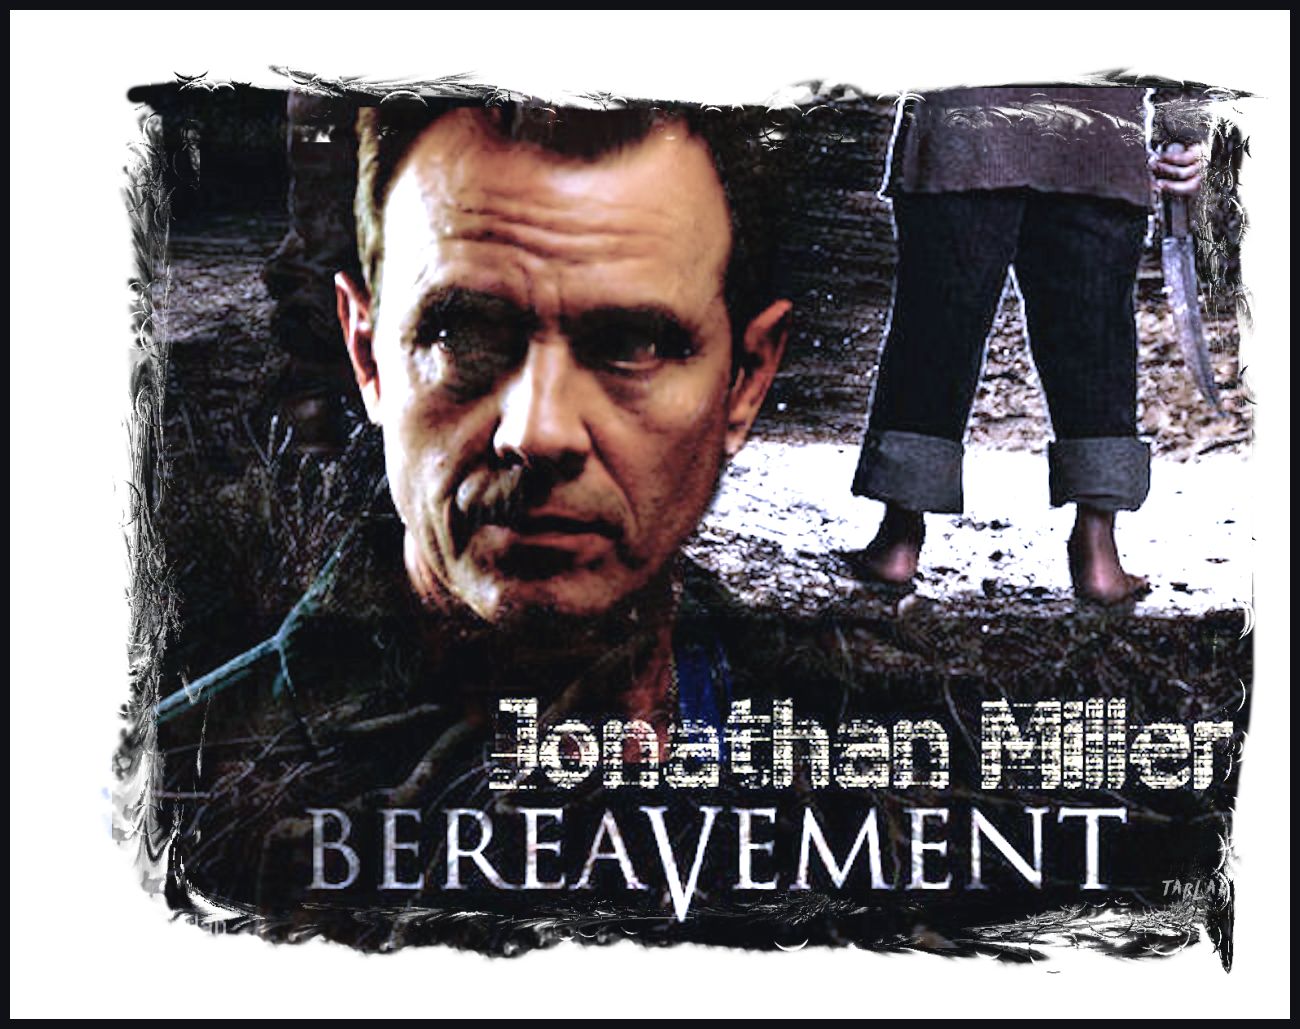 Bereavement - Jonathan Miller 01 by Tarlan
Keywords: bereavement_art;bereavement_wpr